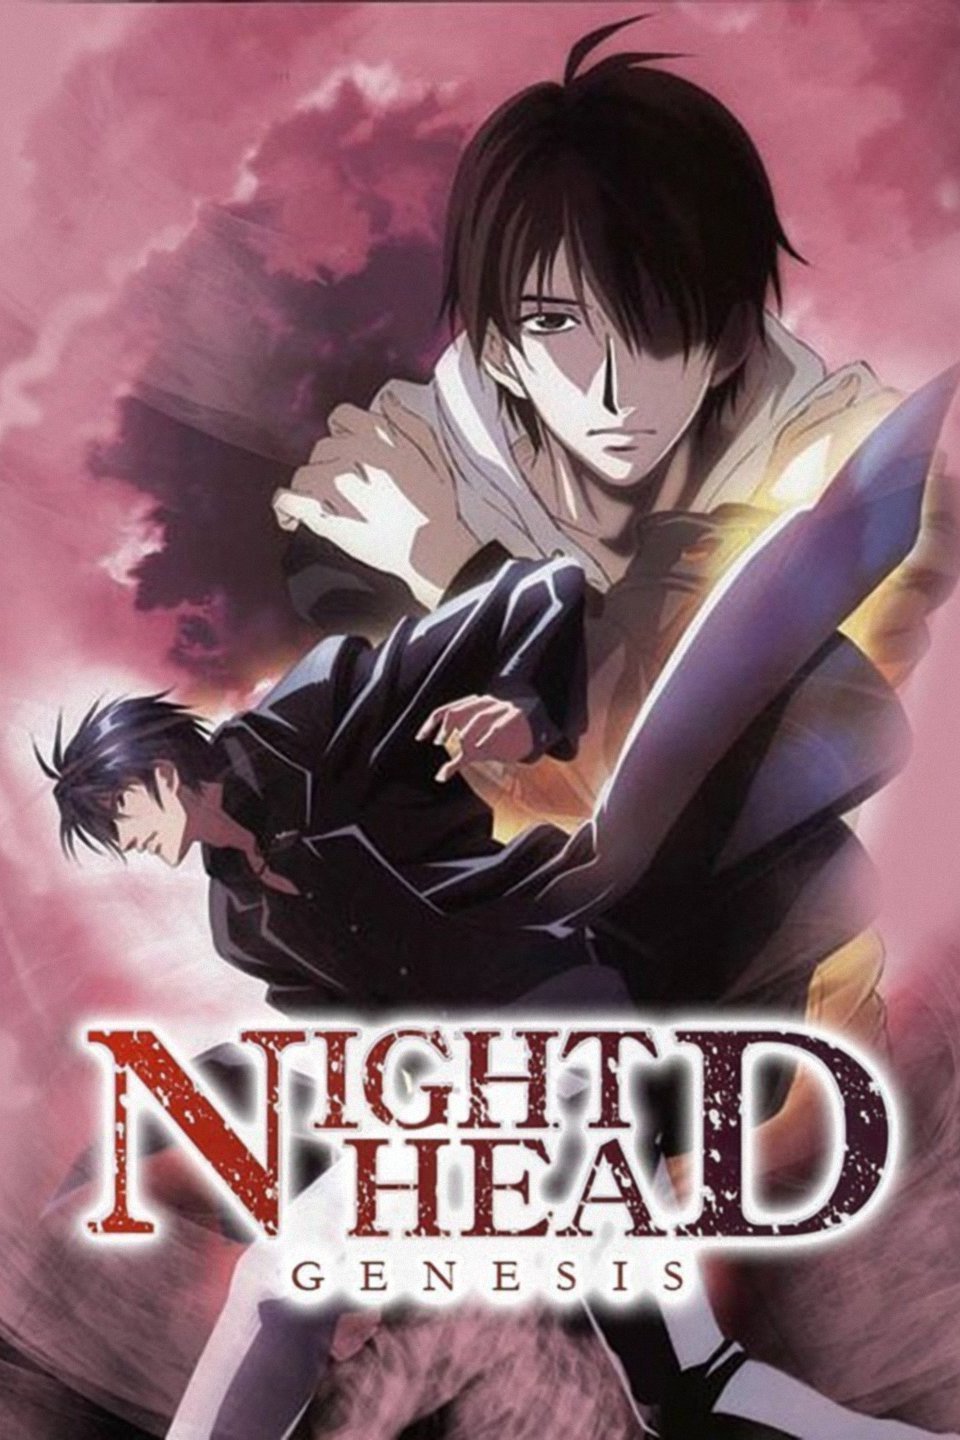 Night Head Genesis - NIGHT HEAD GENESIS (ナイト ヘッド ジェネシス)  (2006) Episode 1